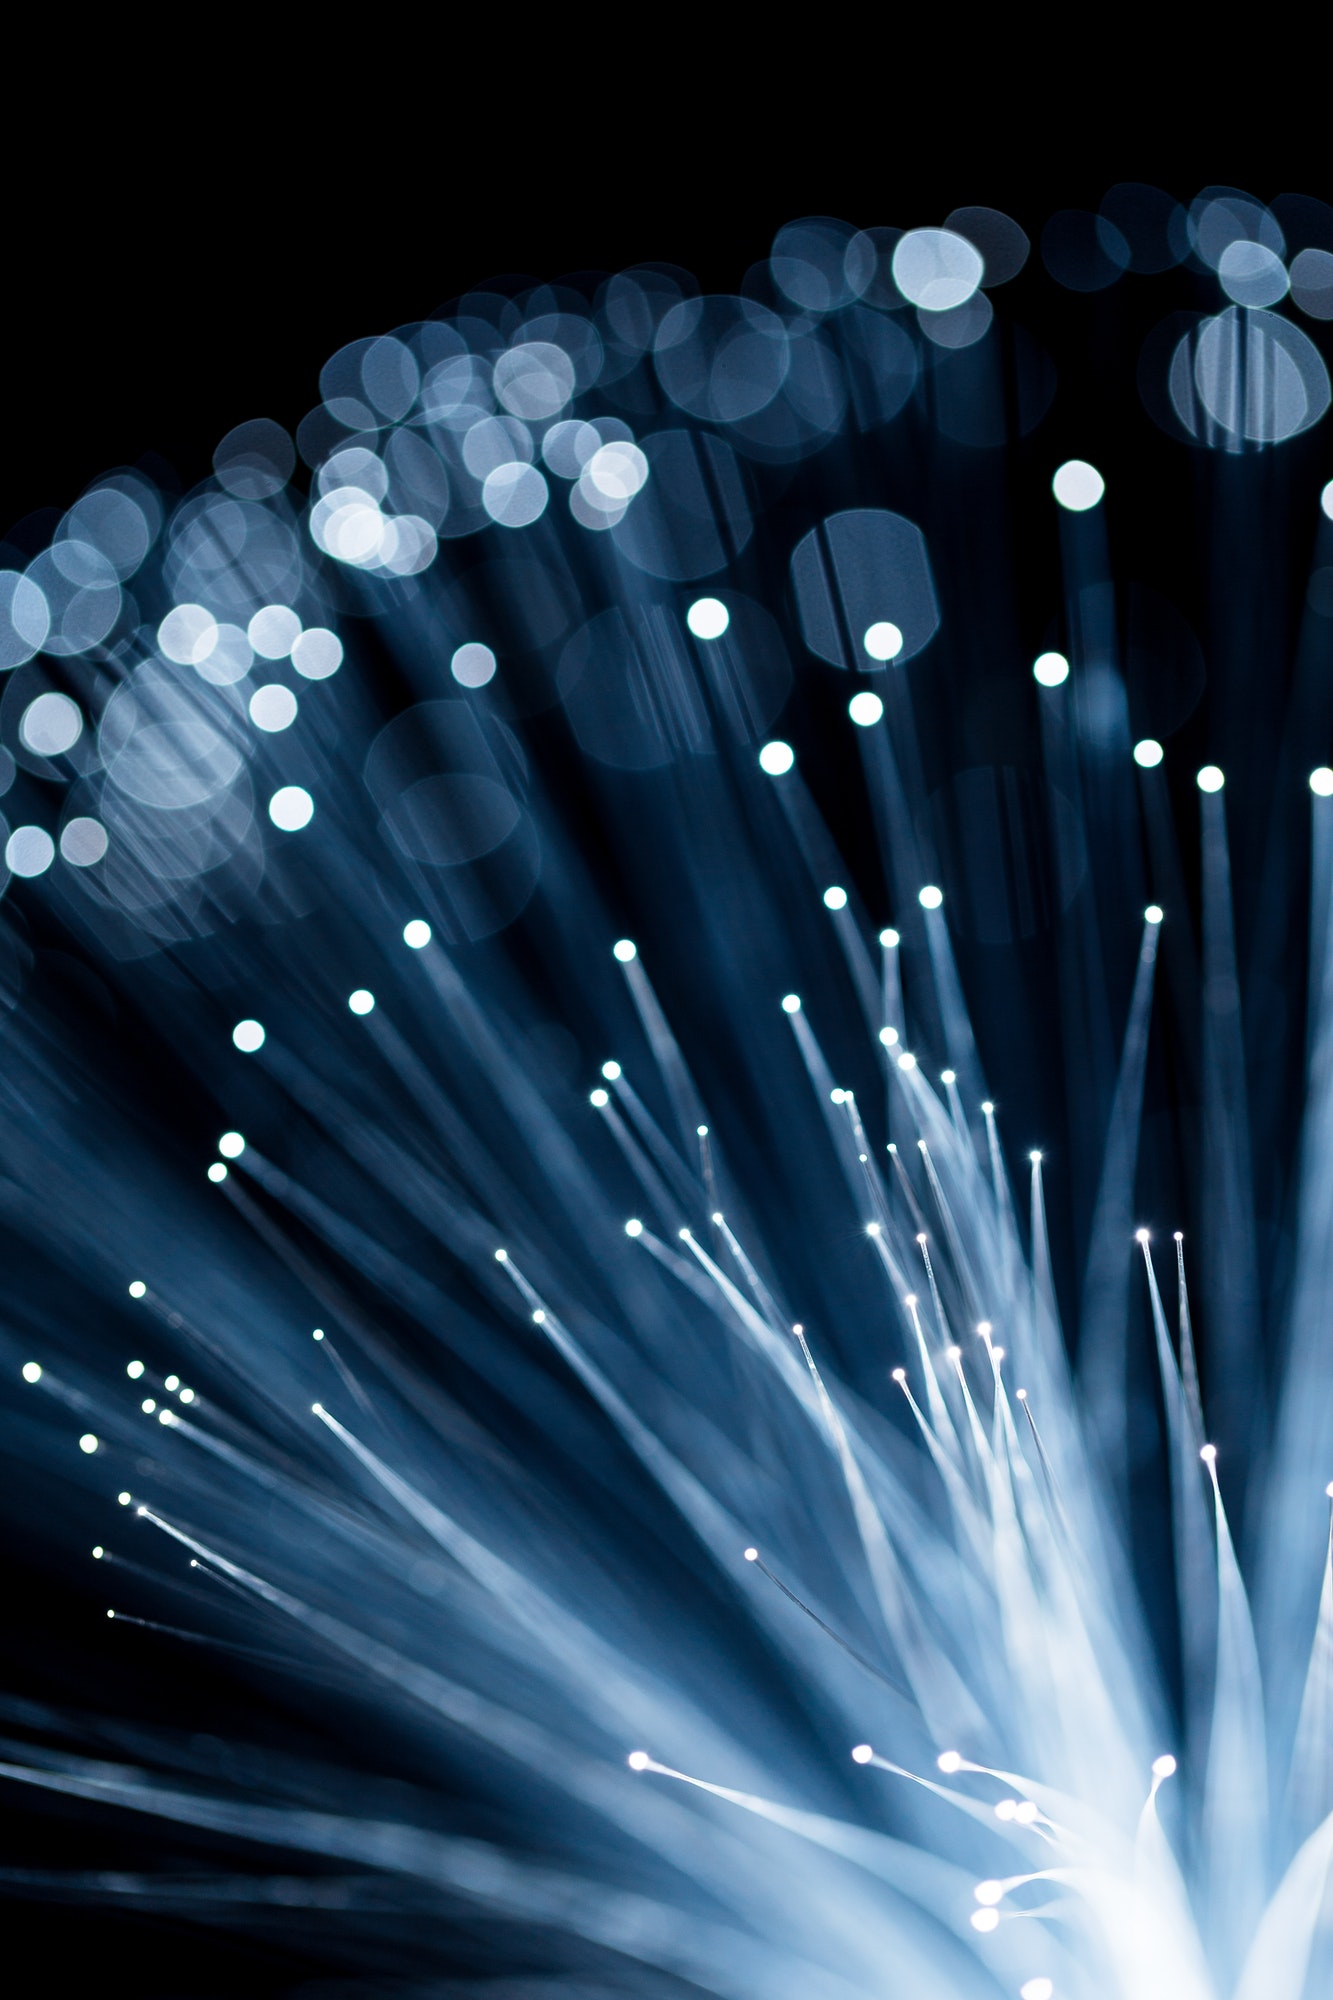 Fiber optical network cable